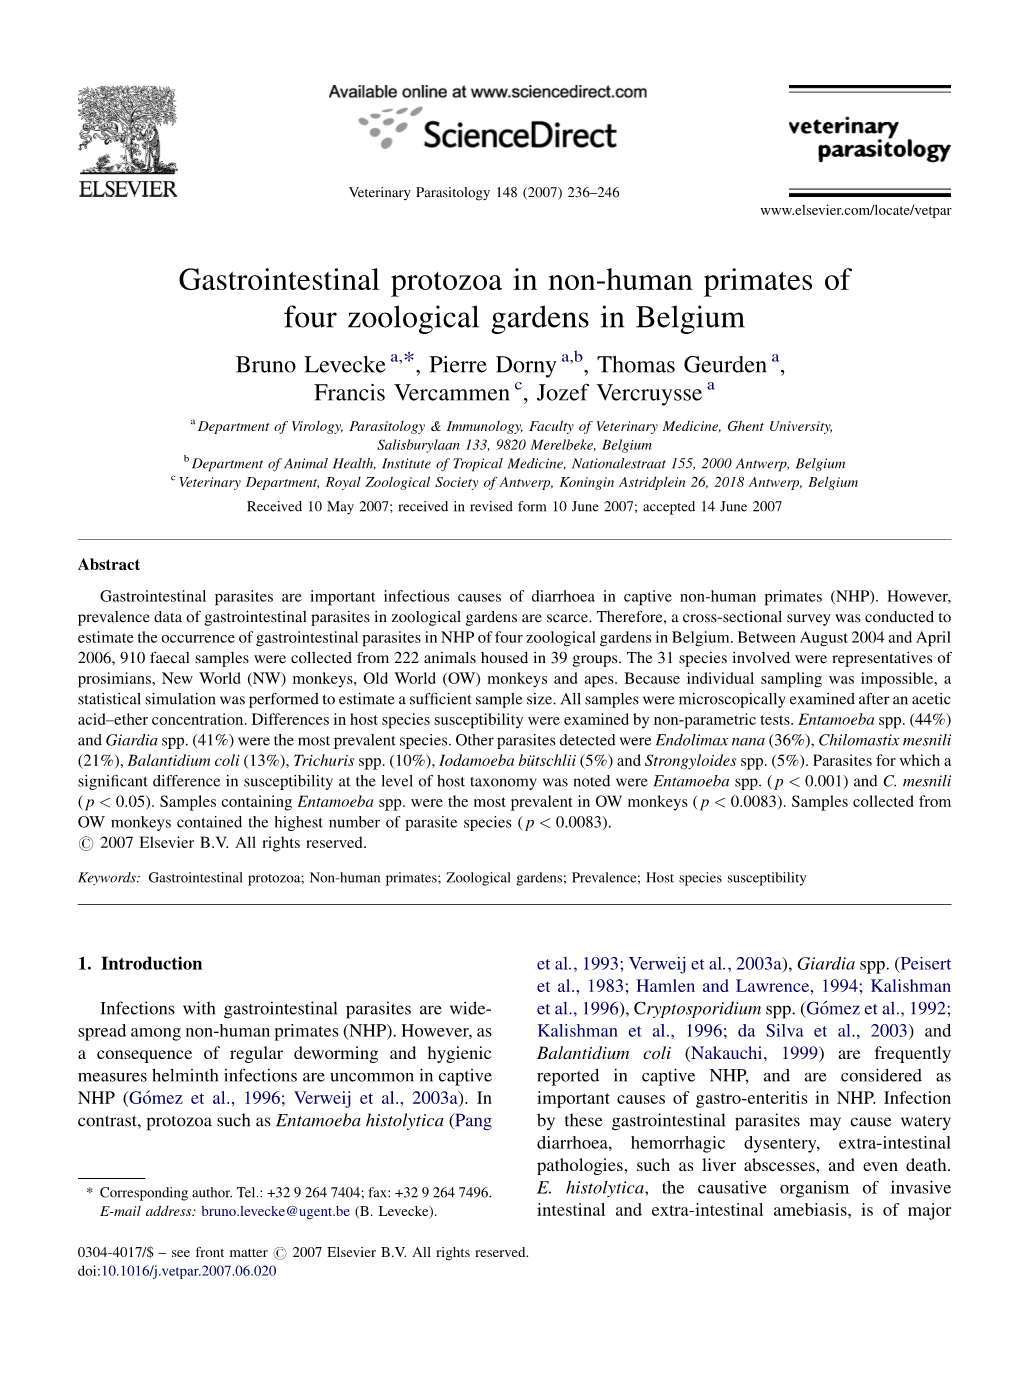 Gastrointestinal Protozoa in Non-Human Primates of Four